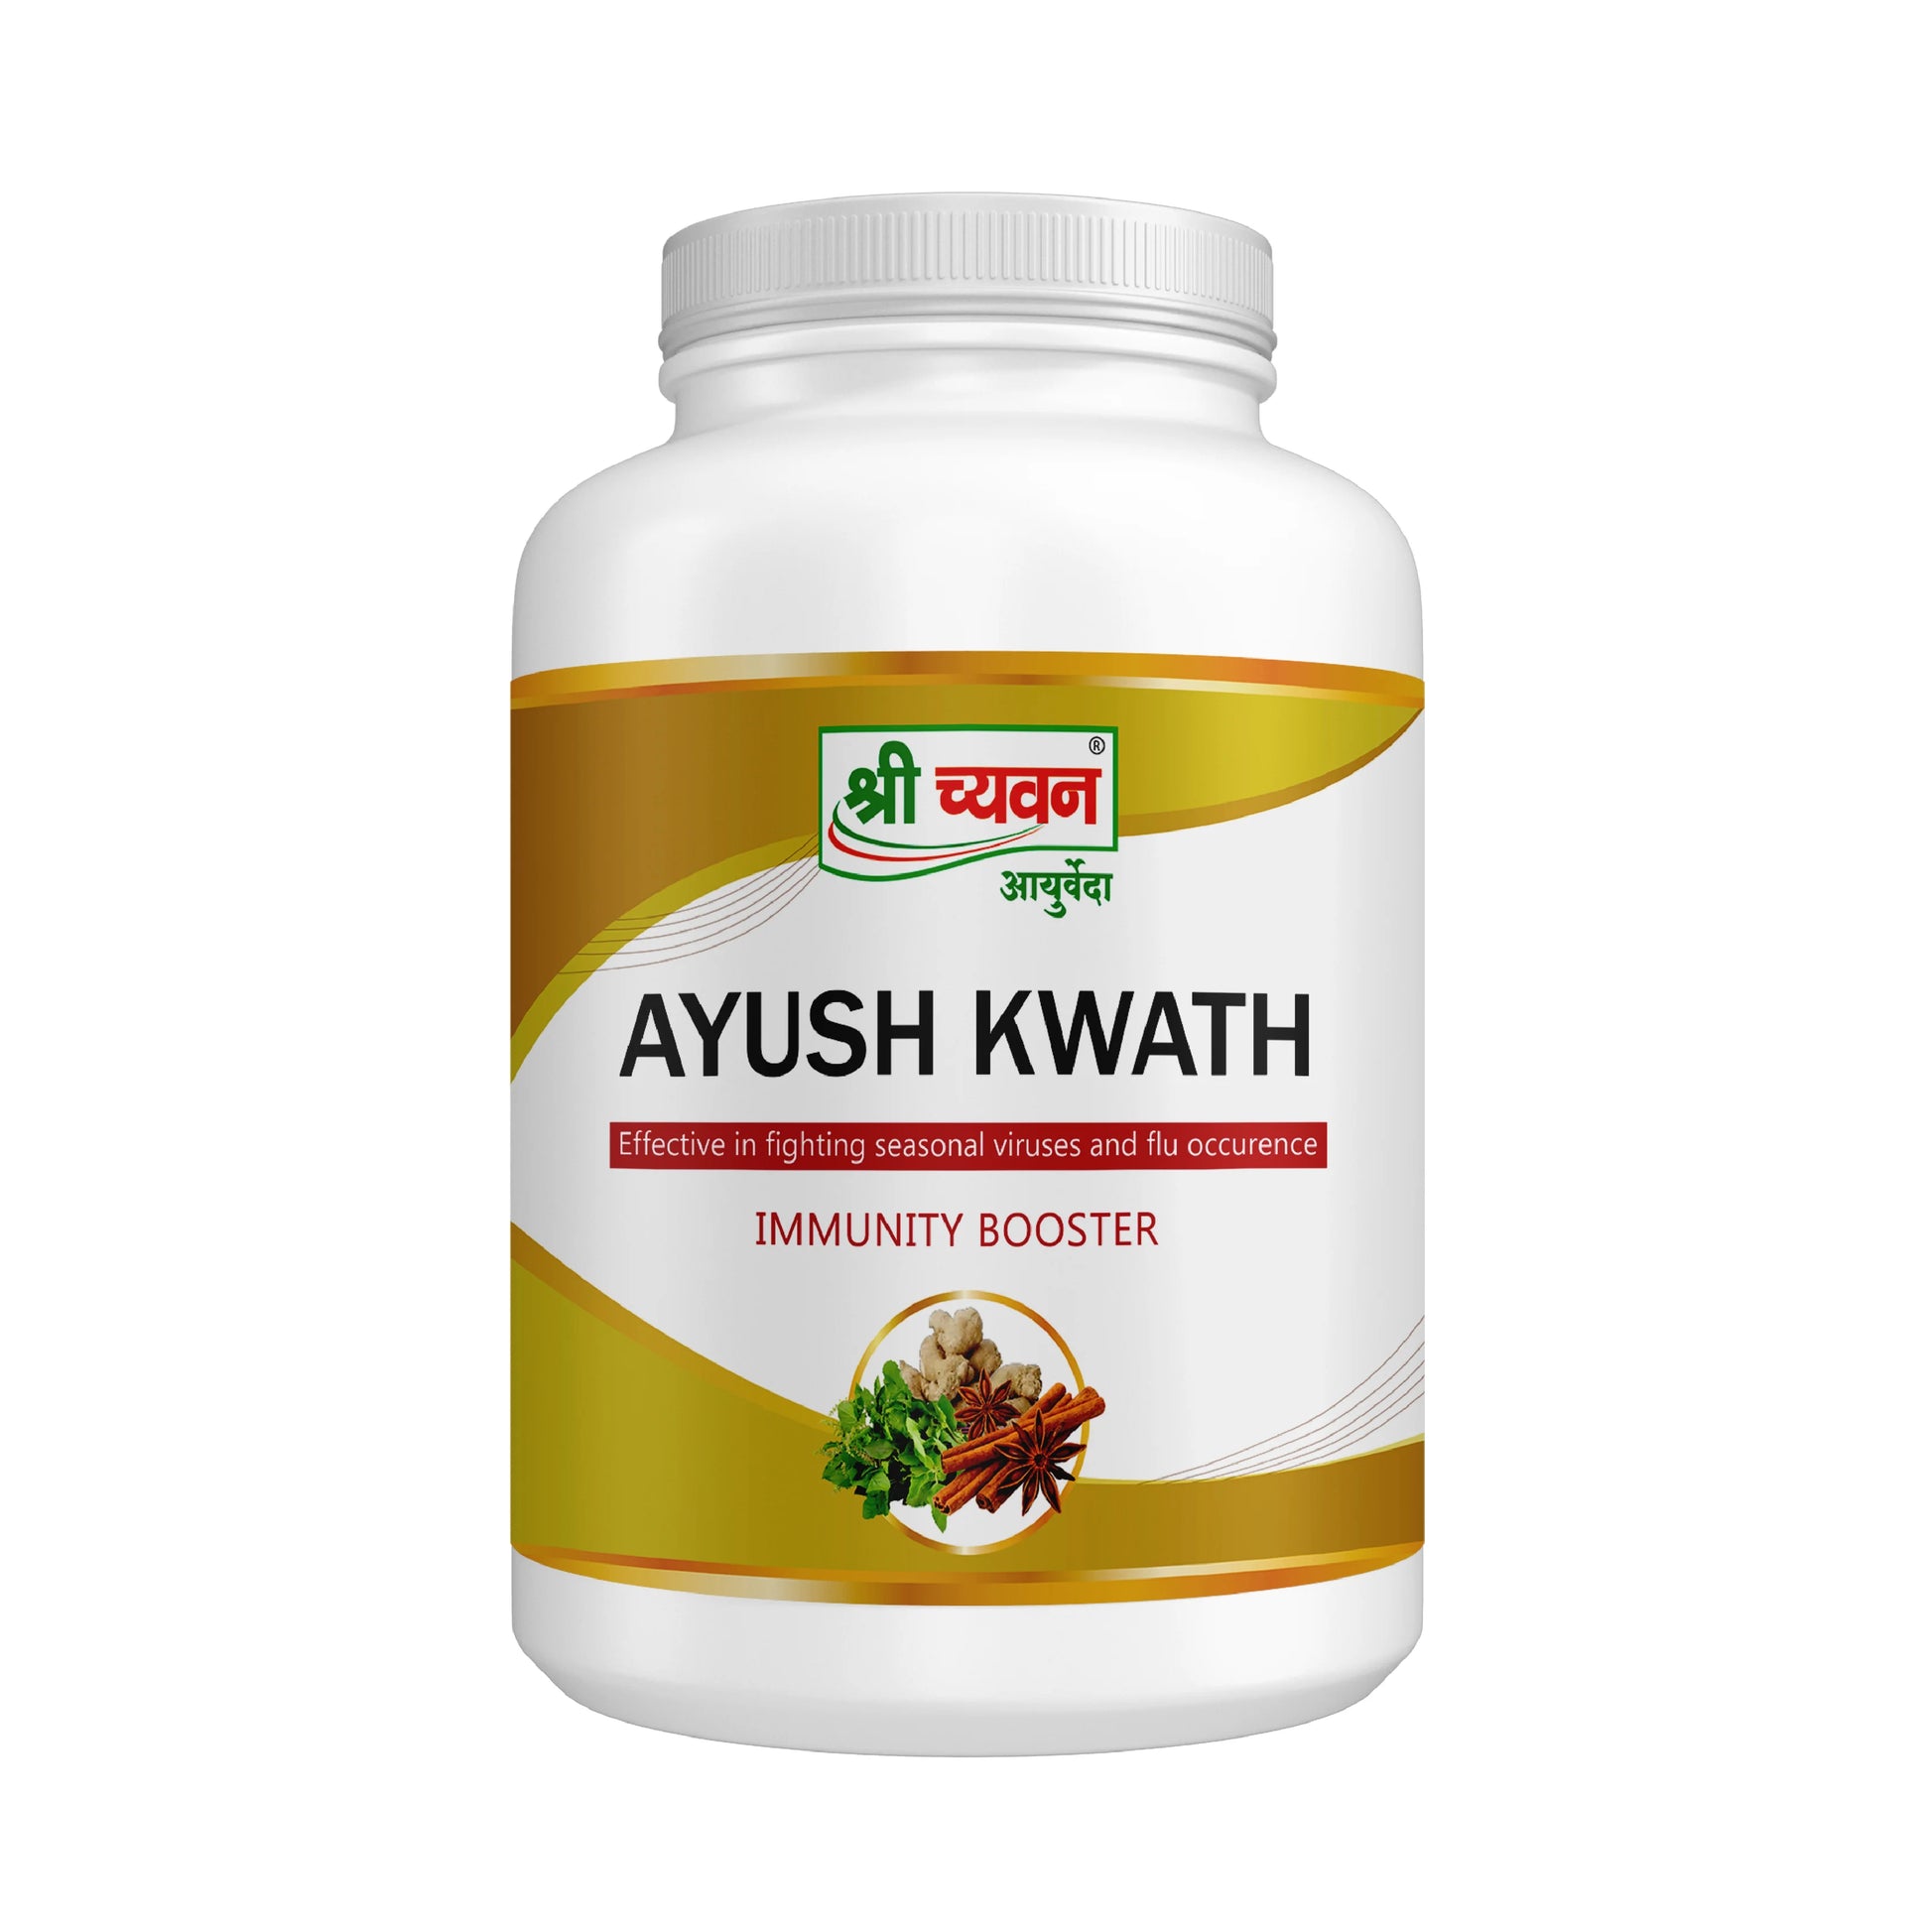 Ayush kwath for immunity boost